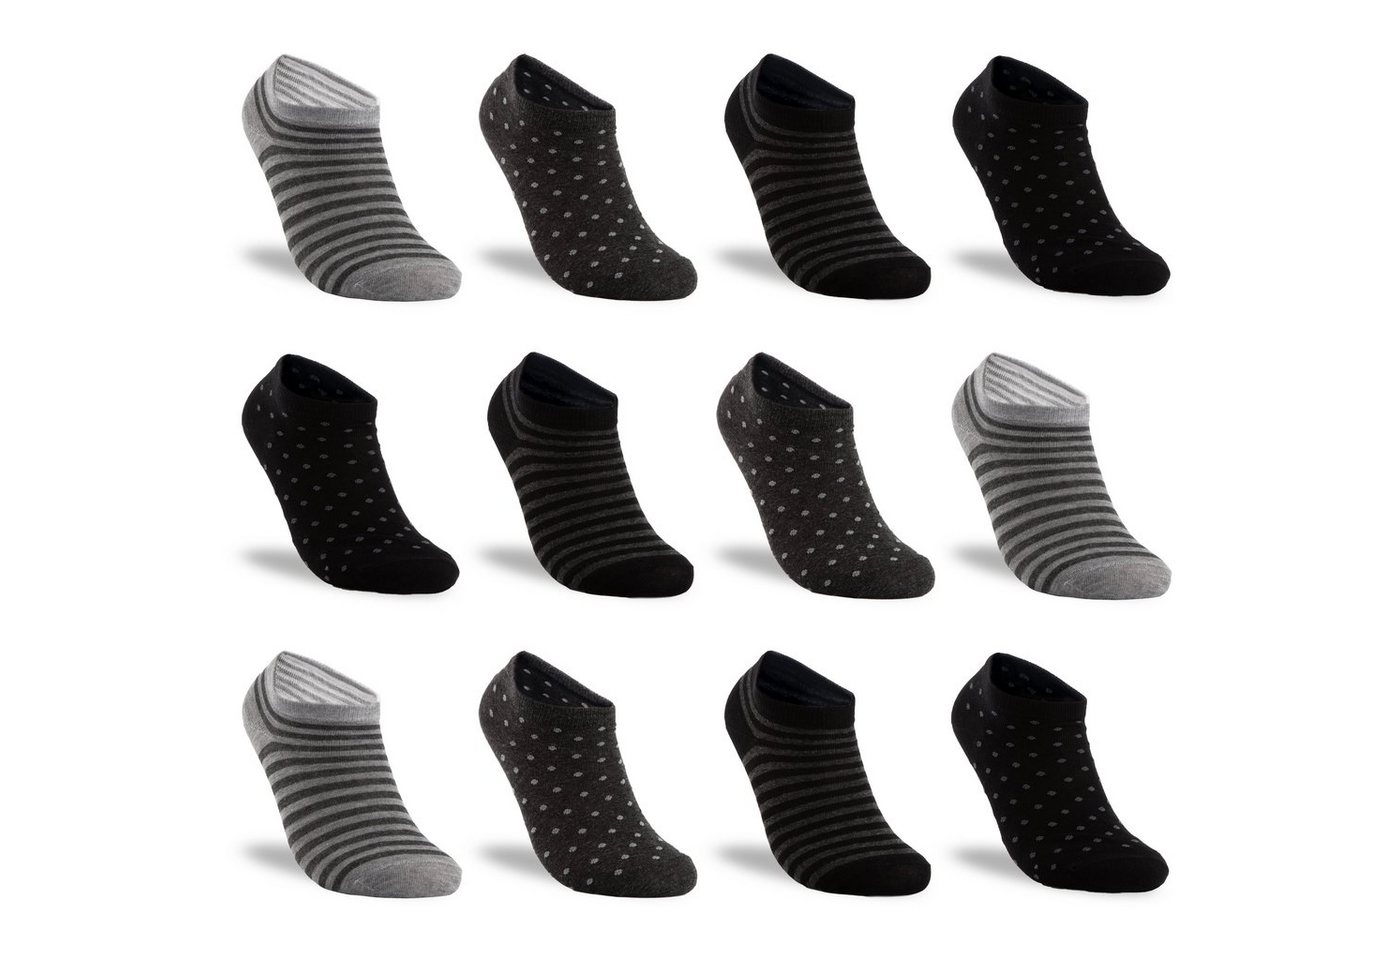 TEXEMP Sneakersocken 6, 12, 18 Paar Damen Sneaker Socken Kinder Baumwolle Freizeit Sport (Packung, 6-Paar) 90% Baumwolle von TEXEMP